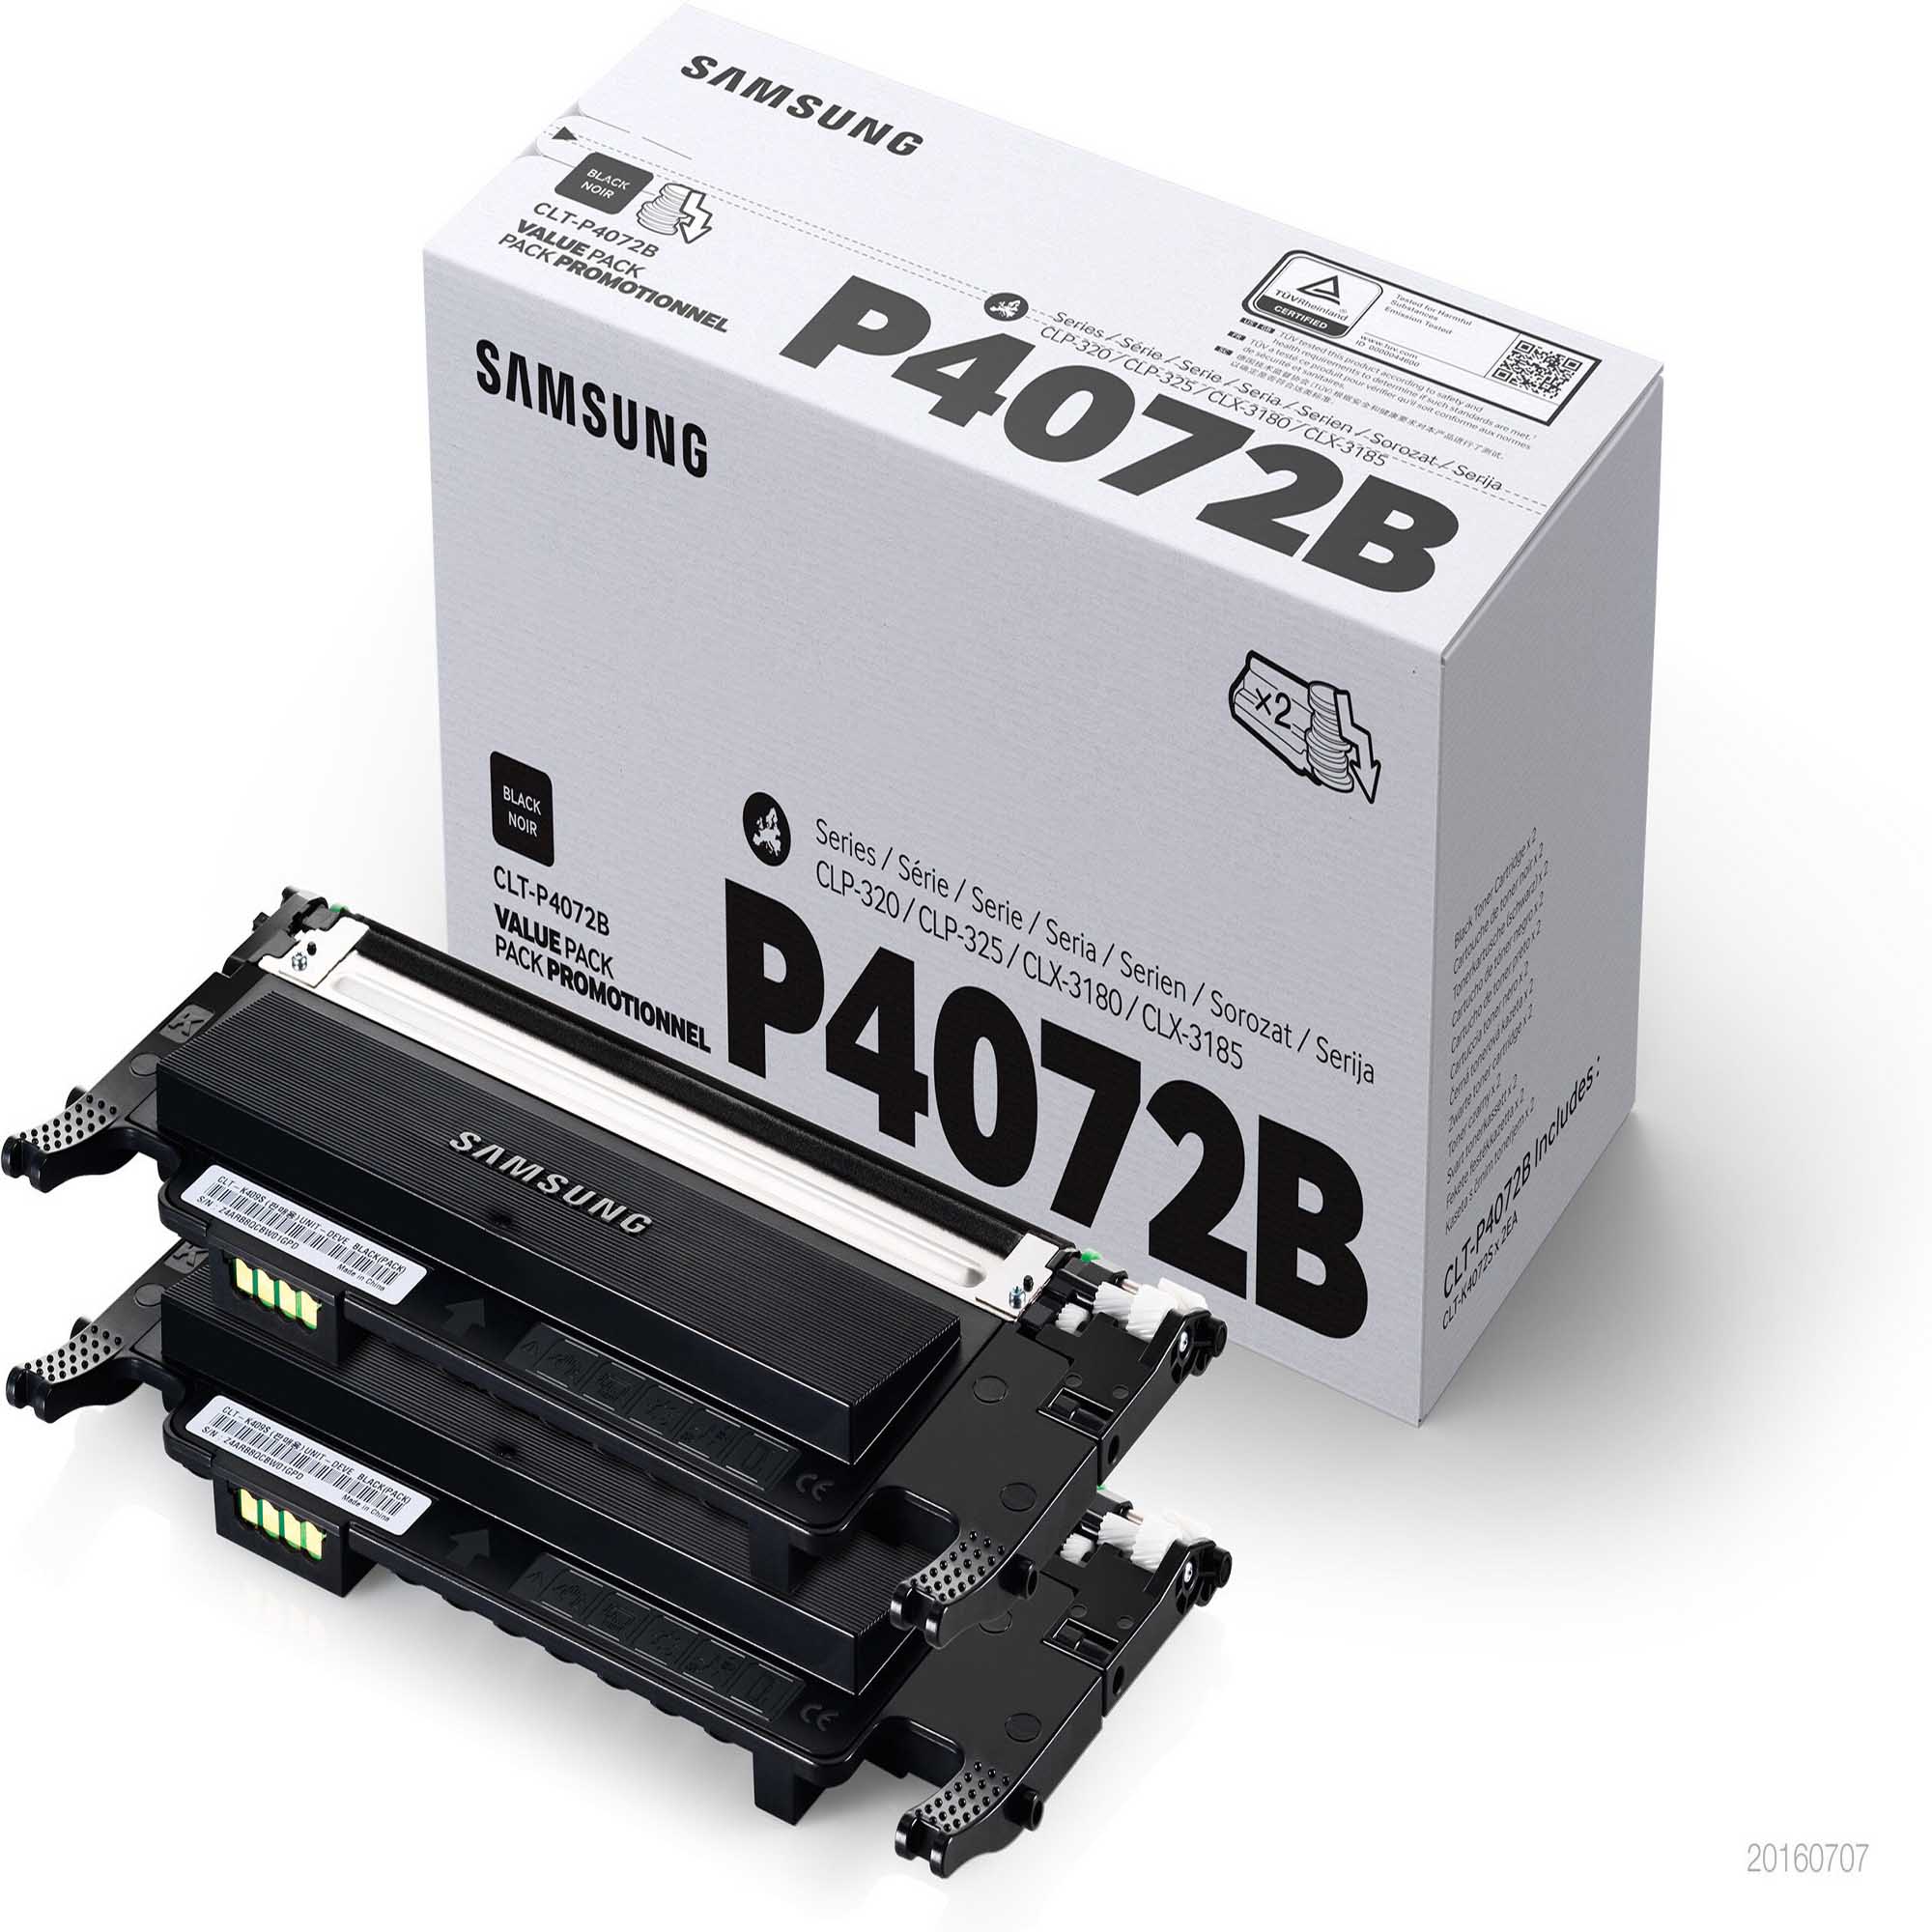 Hp/Samsung - Scatola 2 Toner - Nero - CLTP4072B/ELS - 1.500 pag cad